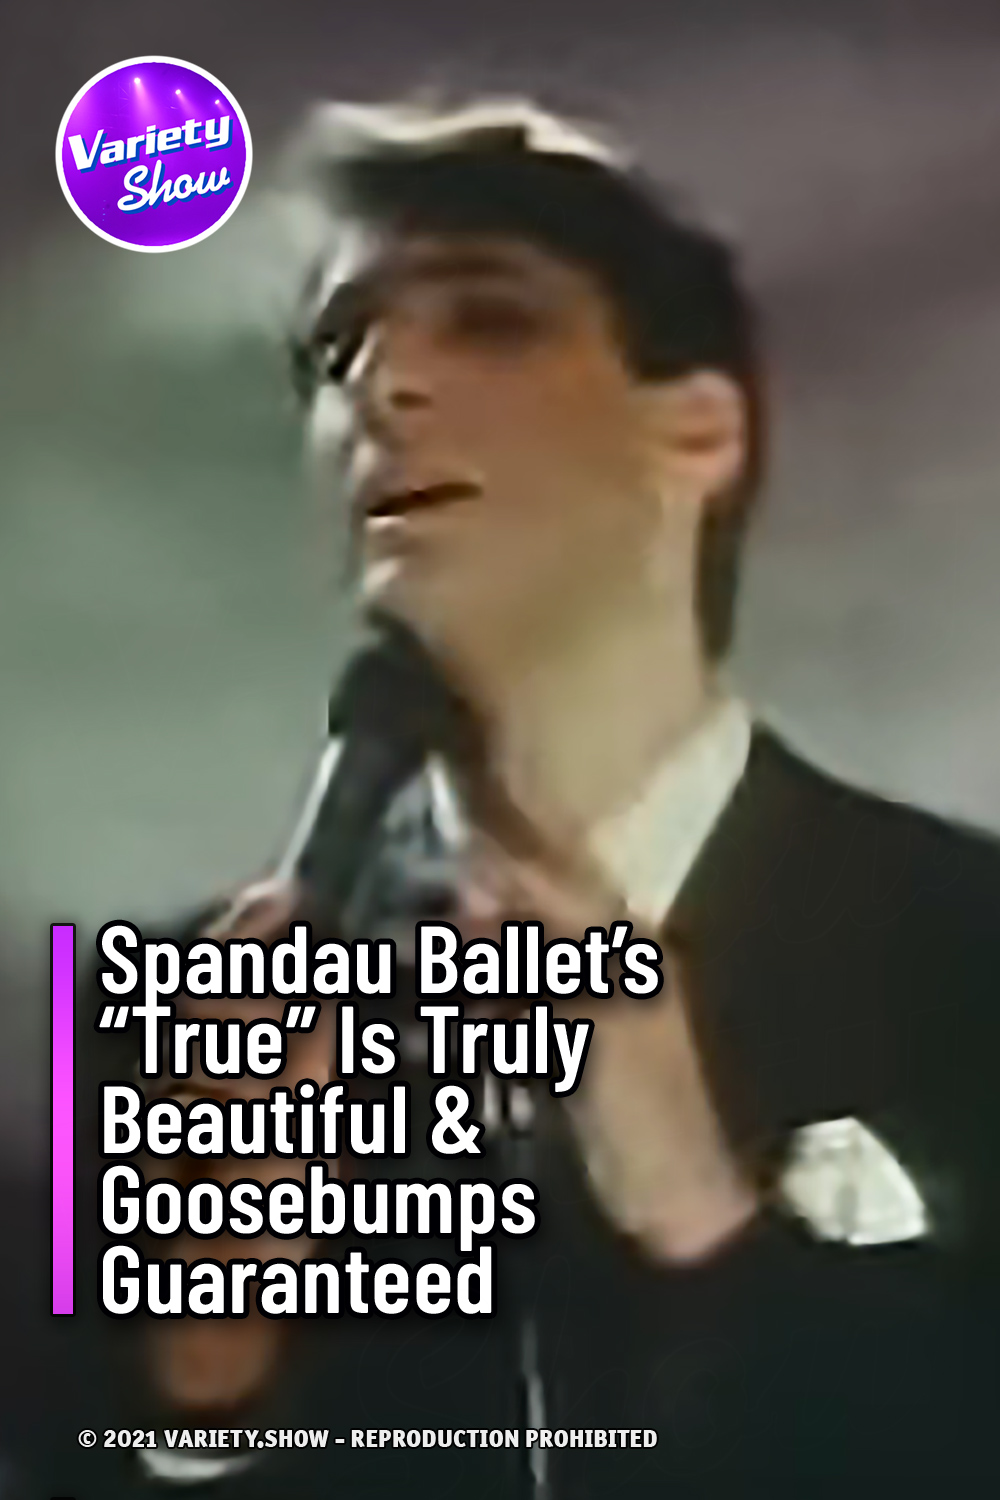 Spandau Ballet’s “True” Is Truly Beautiful & Goosebumps Guaranteed